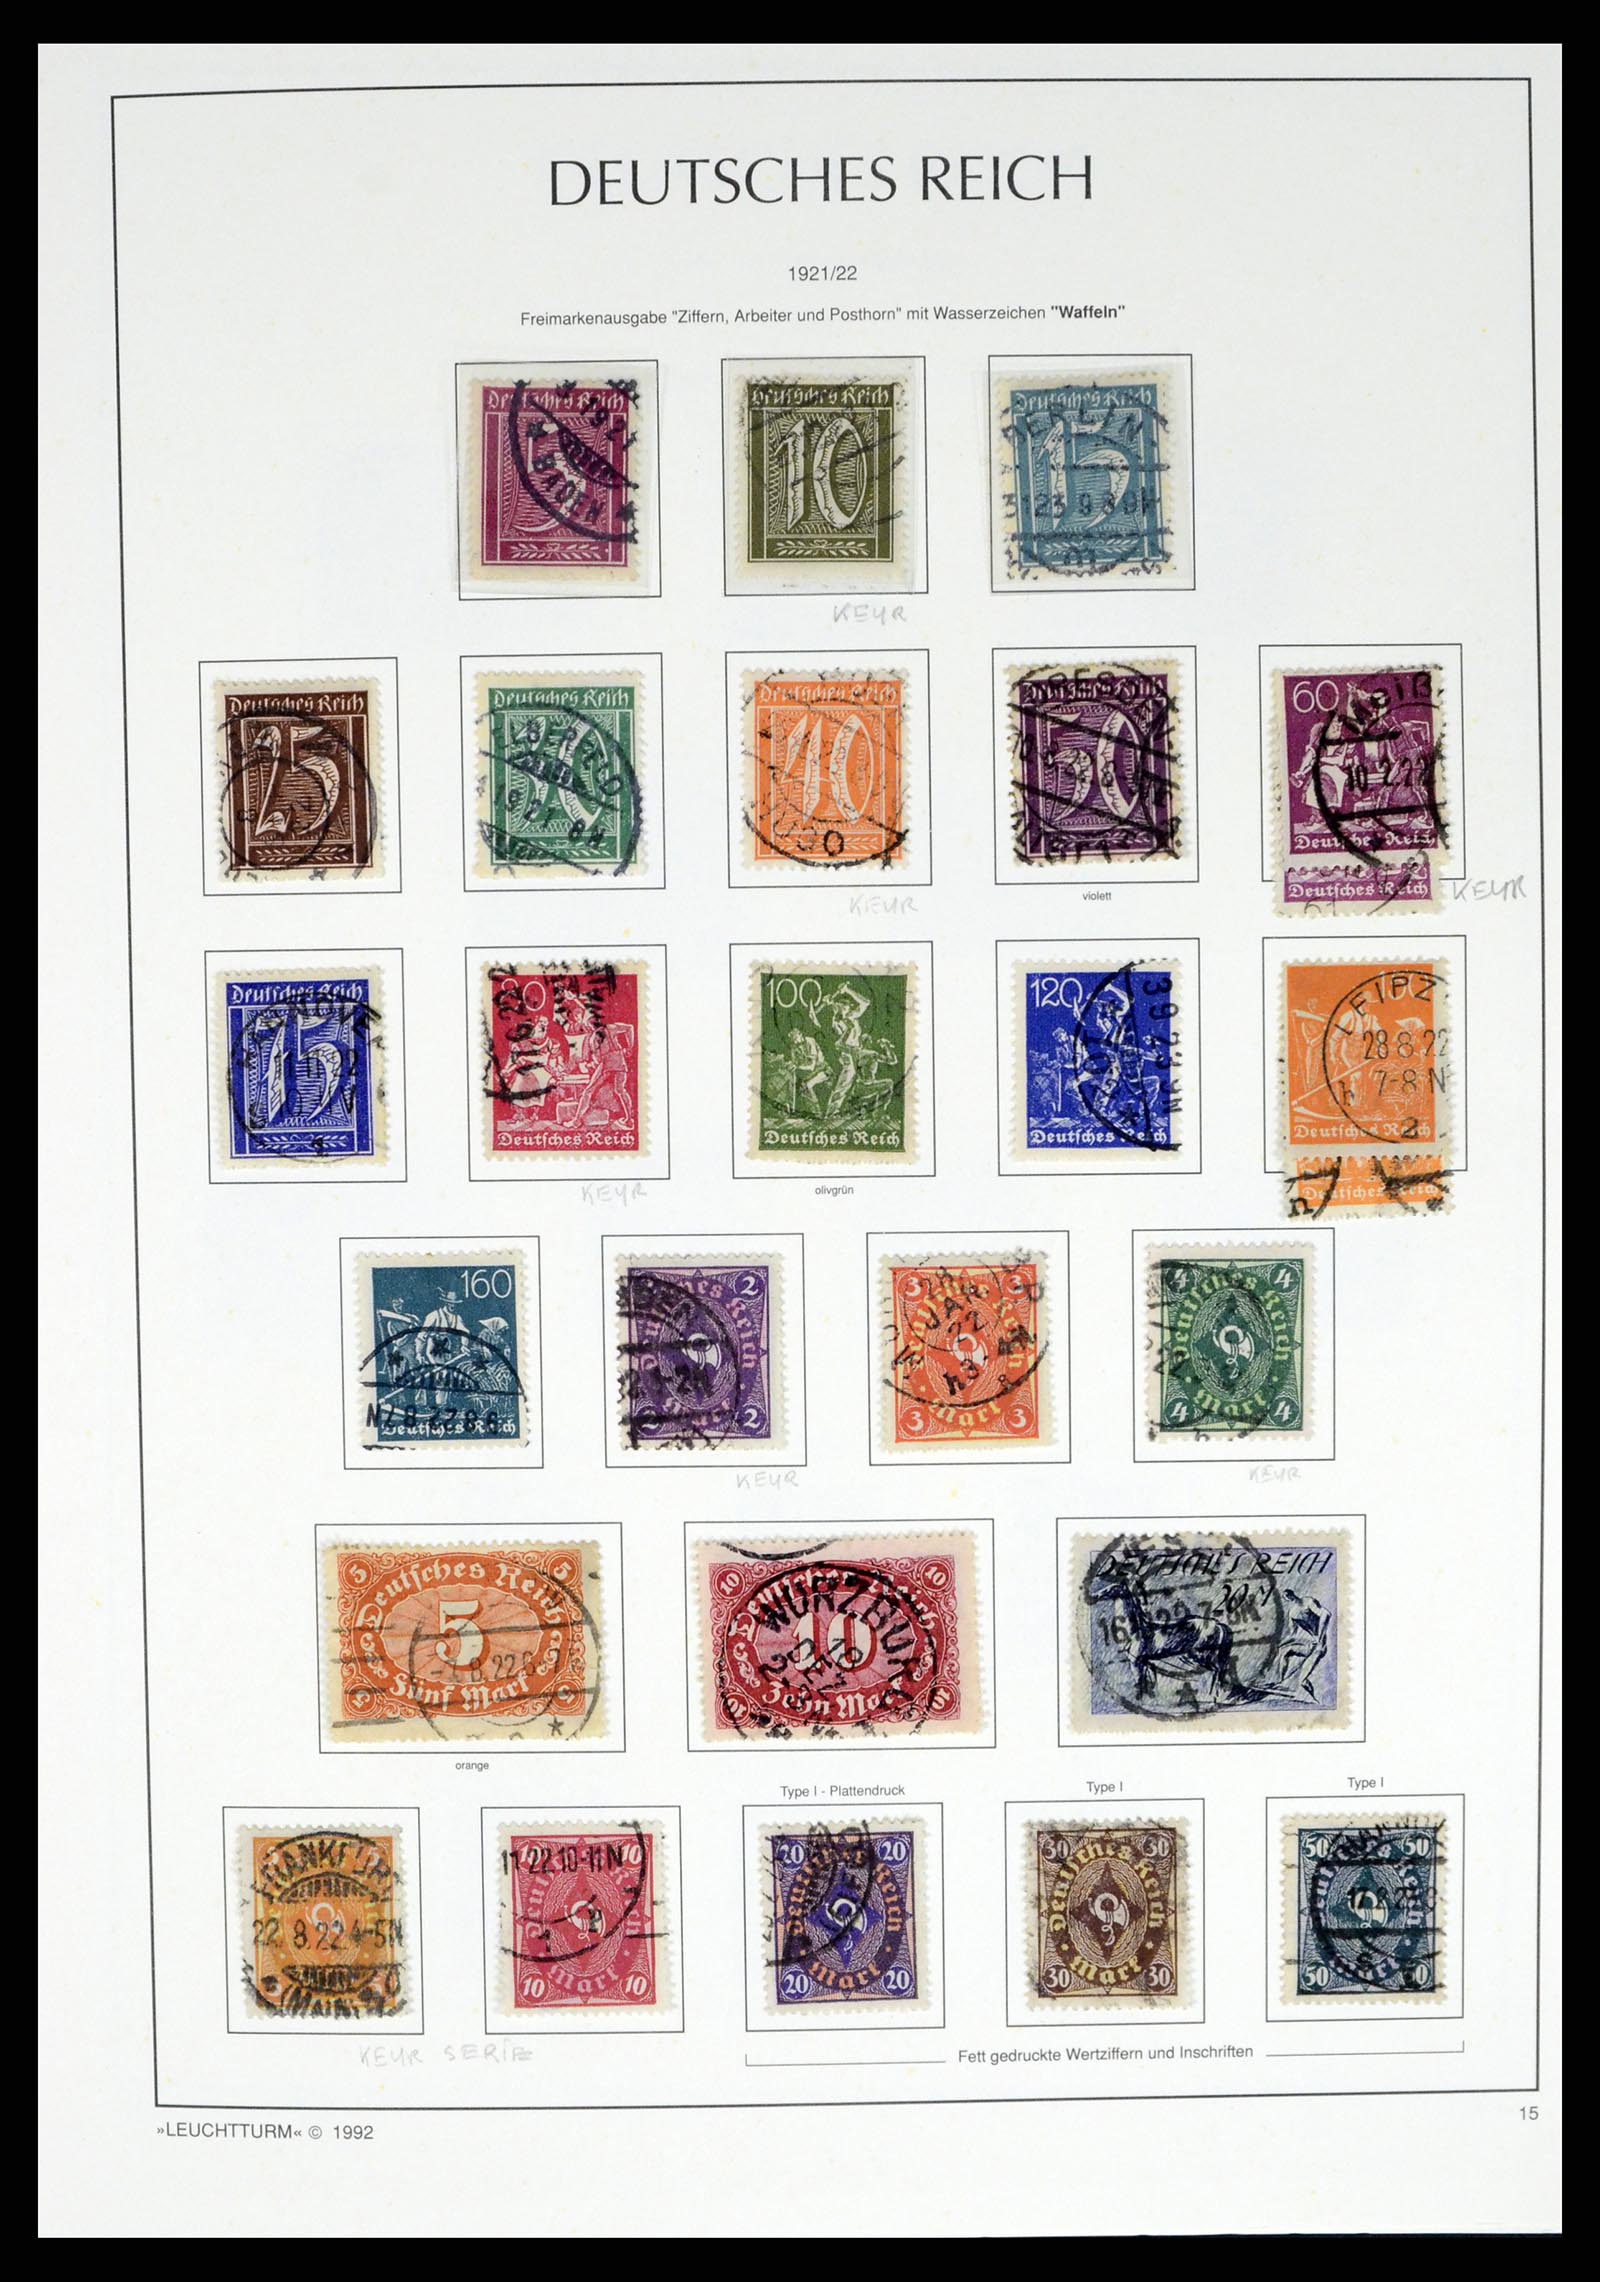 37497 028 - Stamp collection 37497 German Reich 1872-1945.